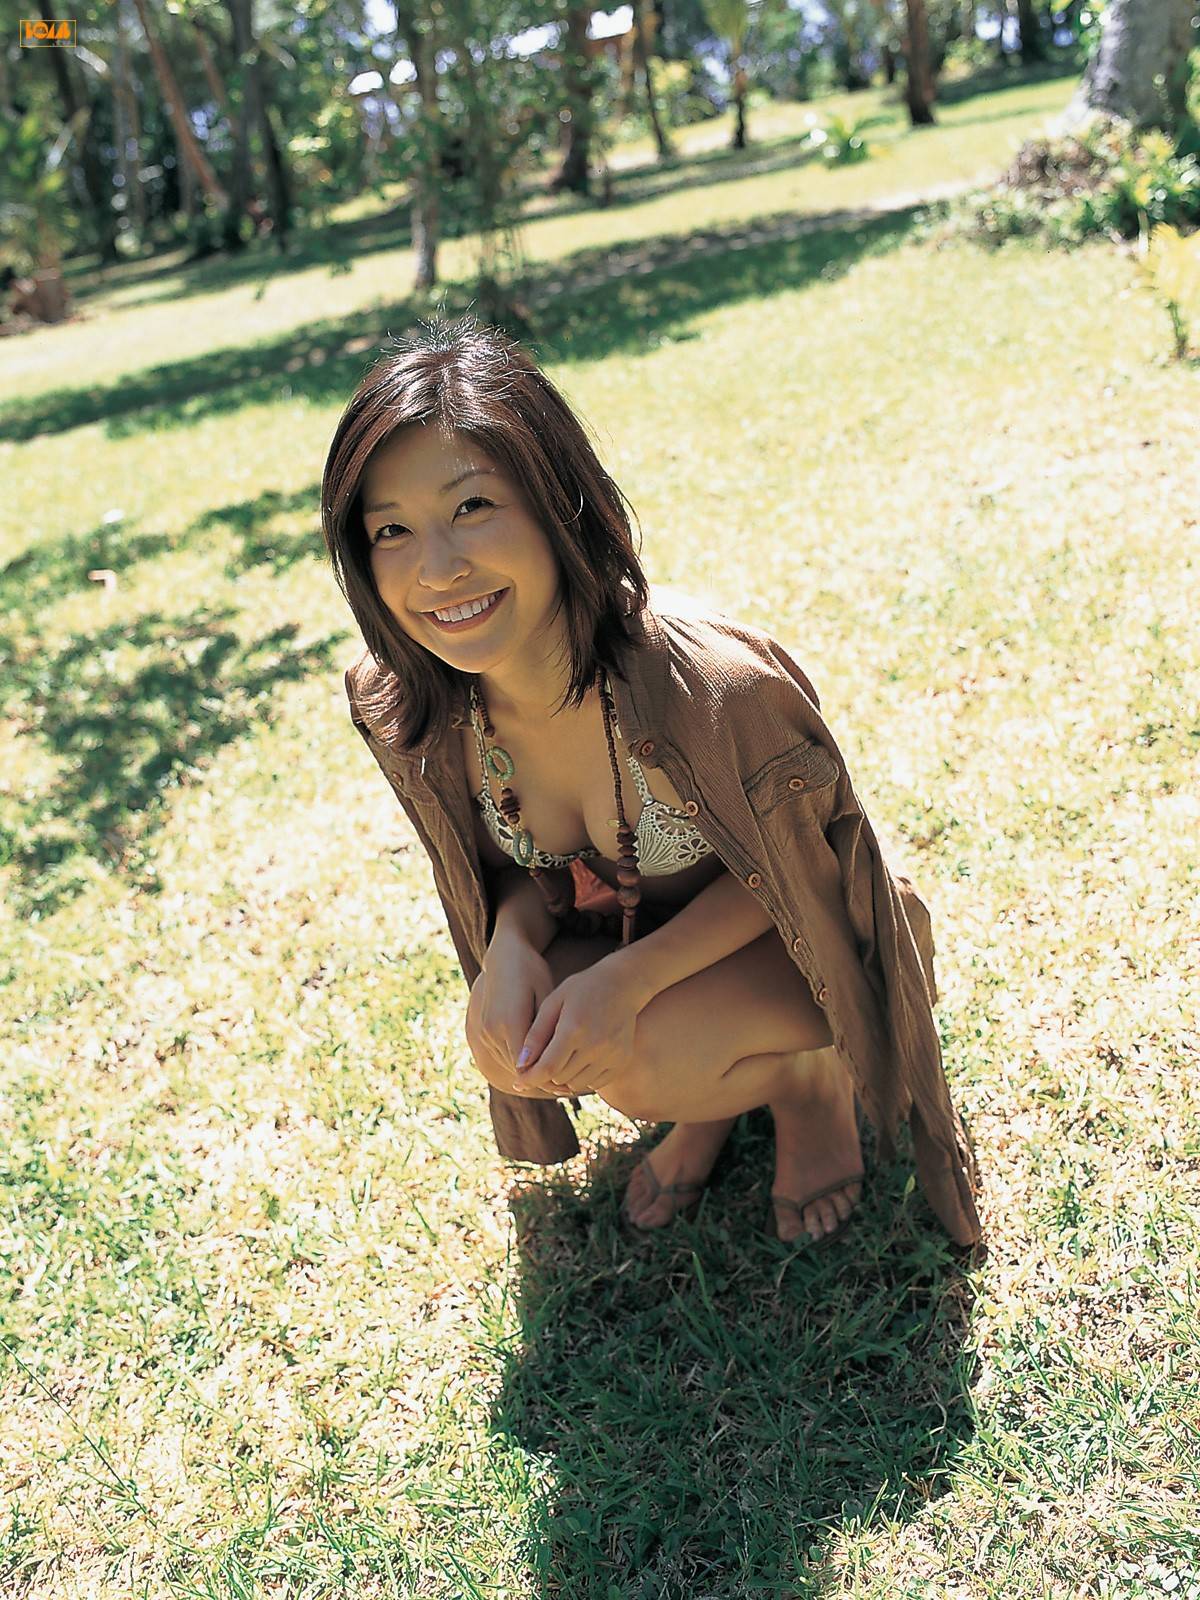 Mayumi Ono Bomb.tv Photo series of CD